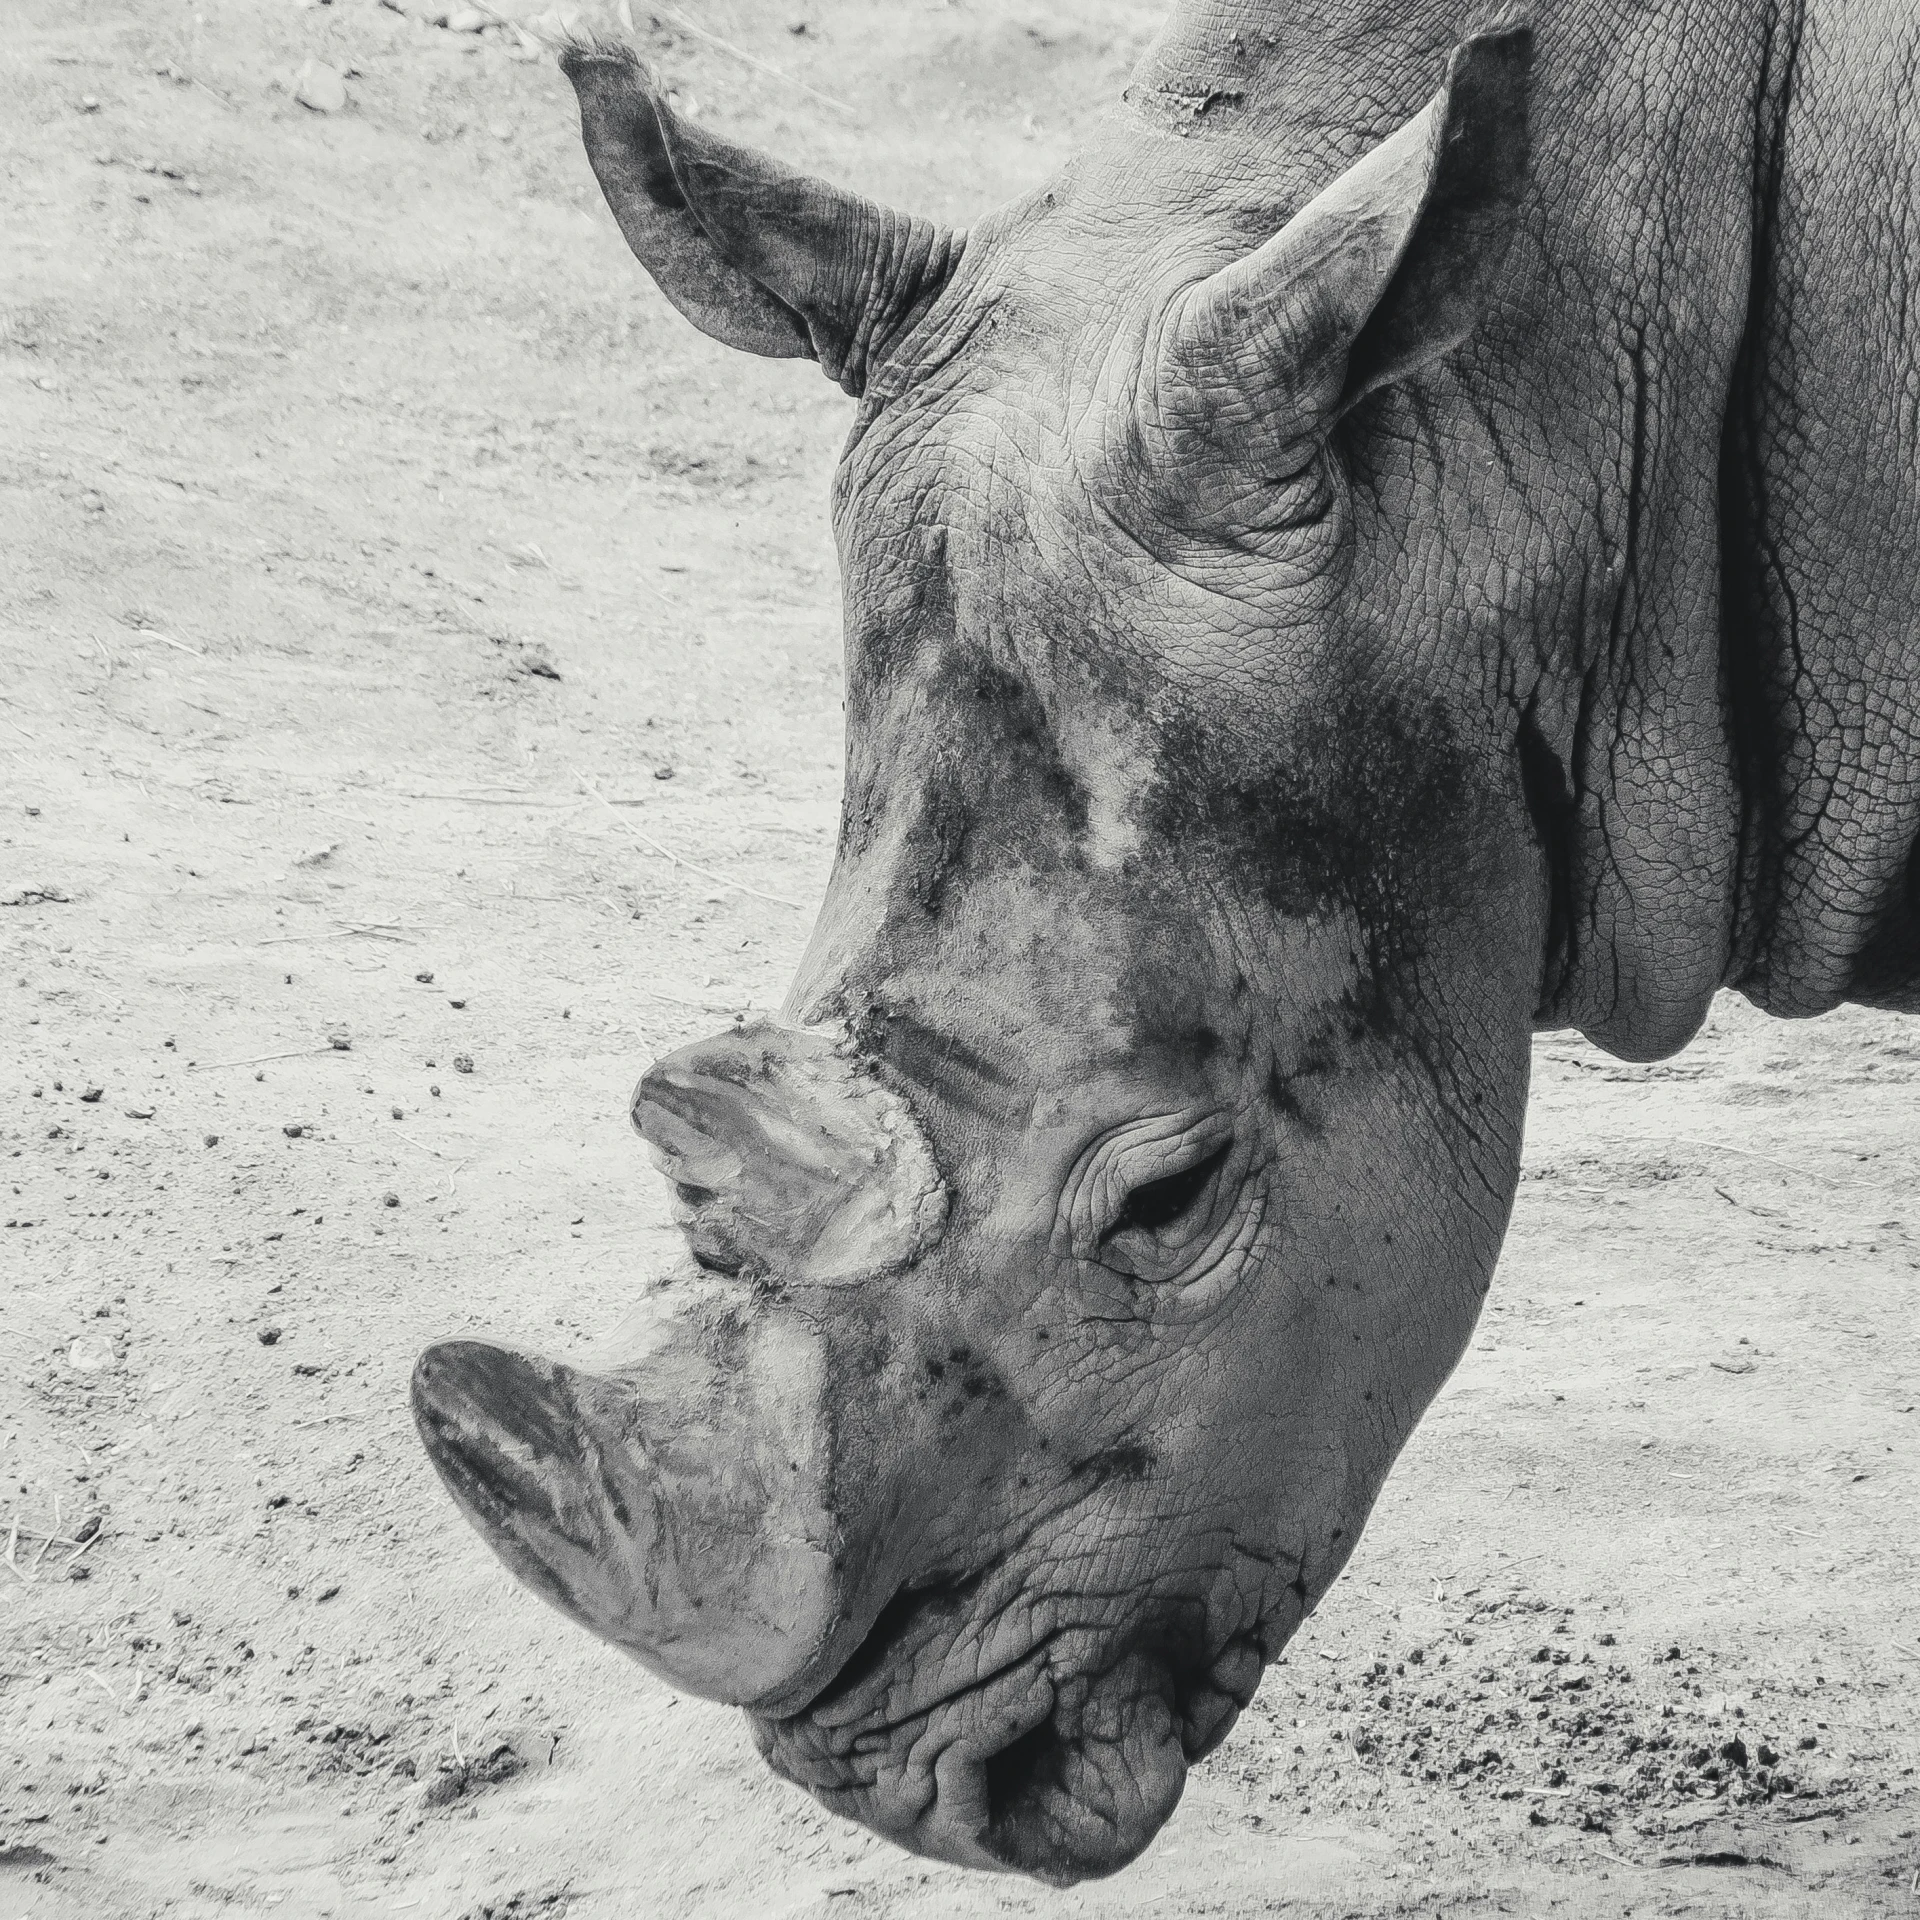 a rhino is standing in a desert like area